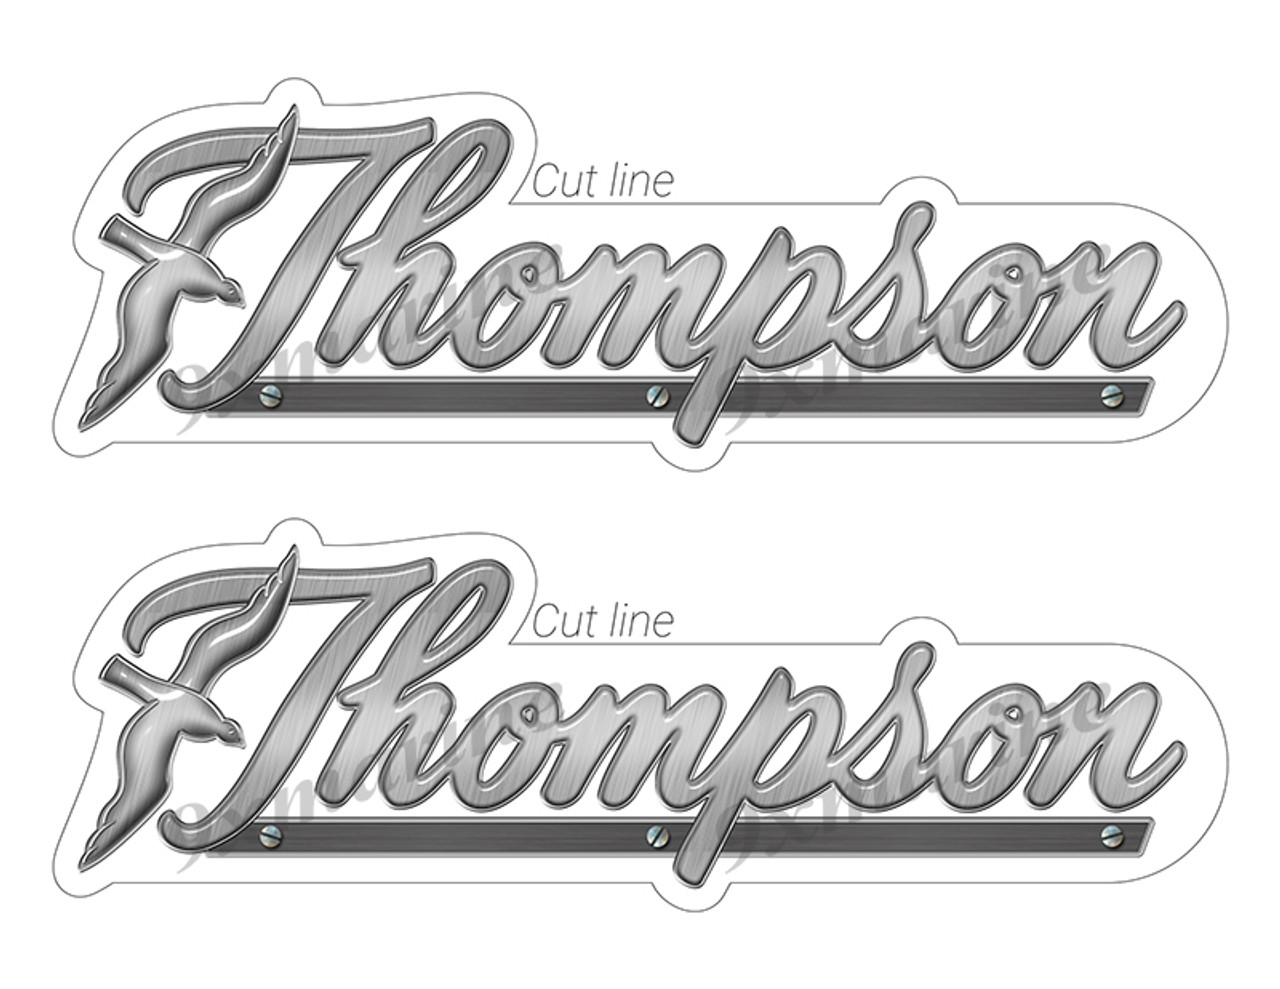 2 Thompson Boat Stickers "3D Vinyl Replica" of original